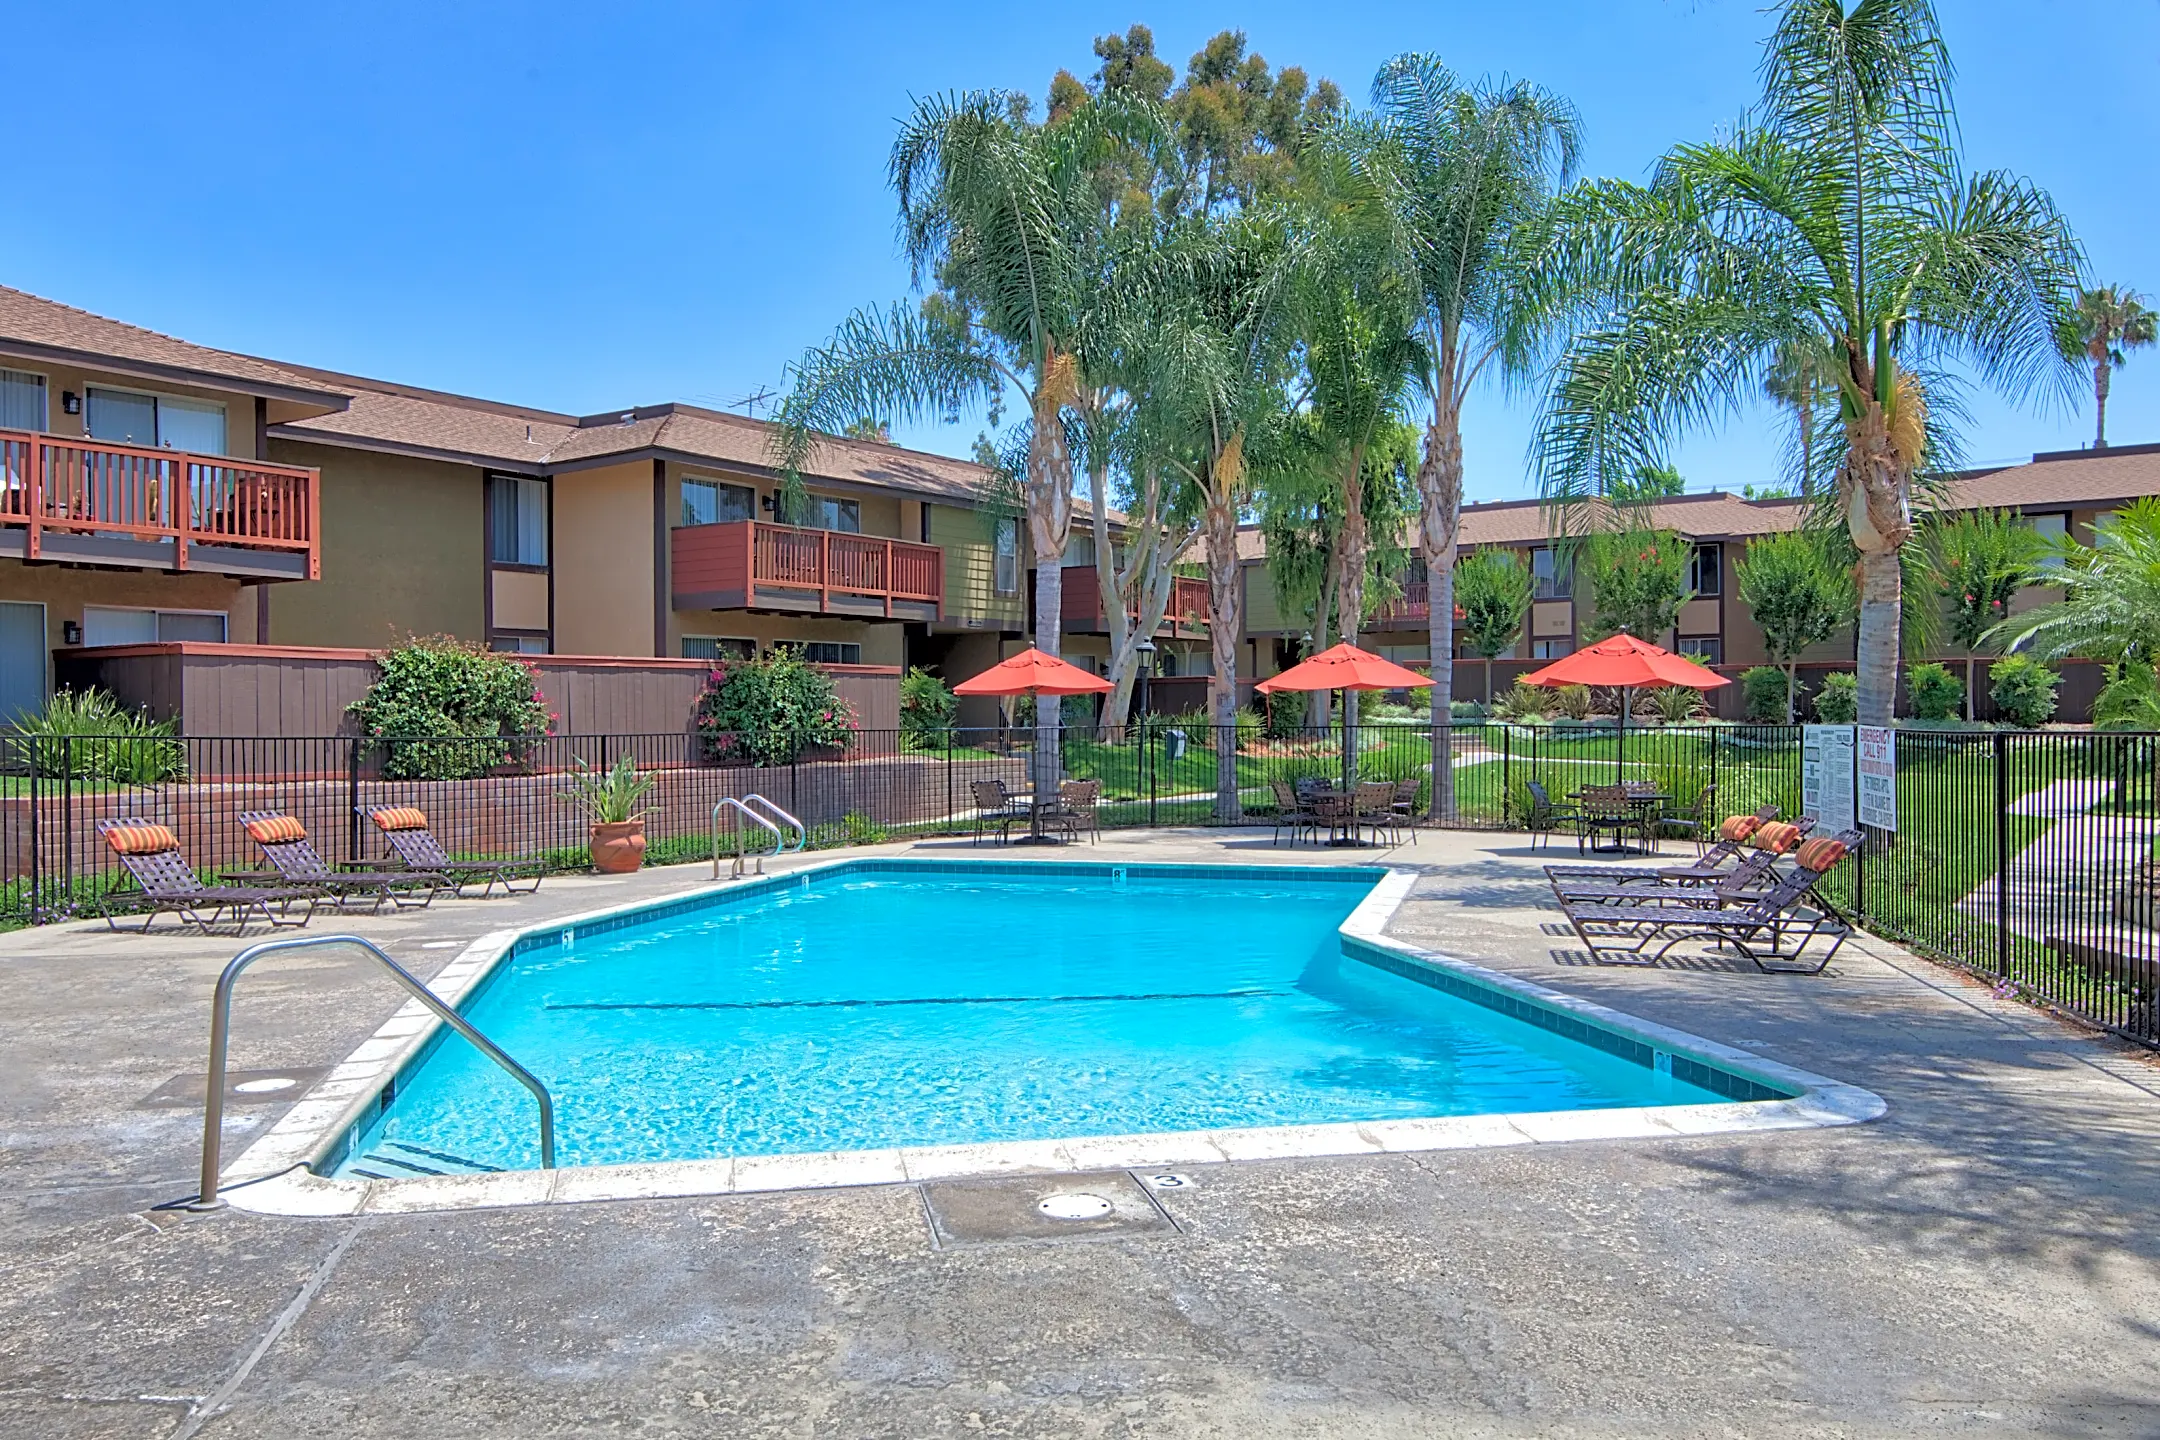 Pool - Los Arbolitos Timbers Apartments - Riverside, CA